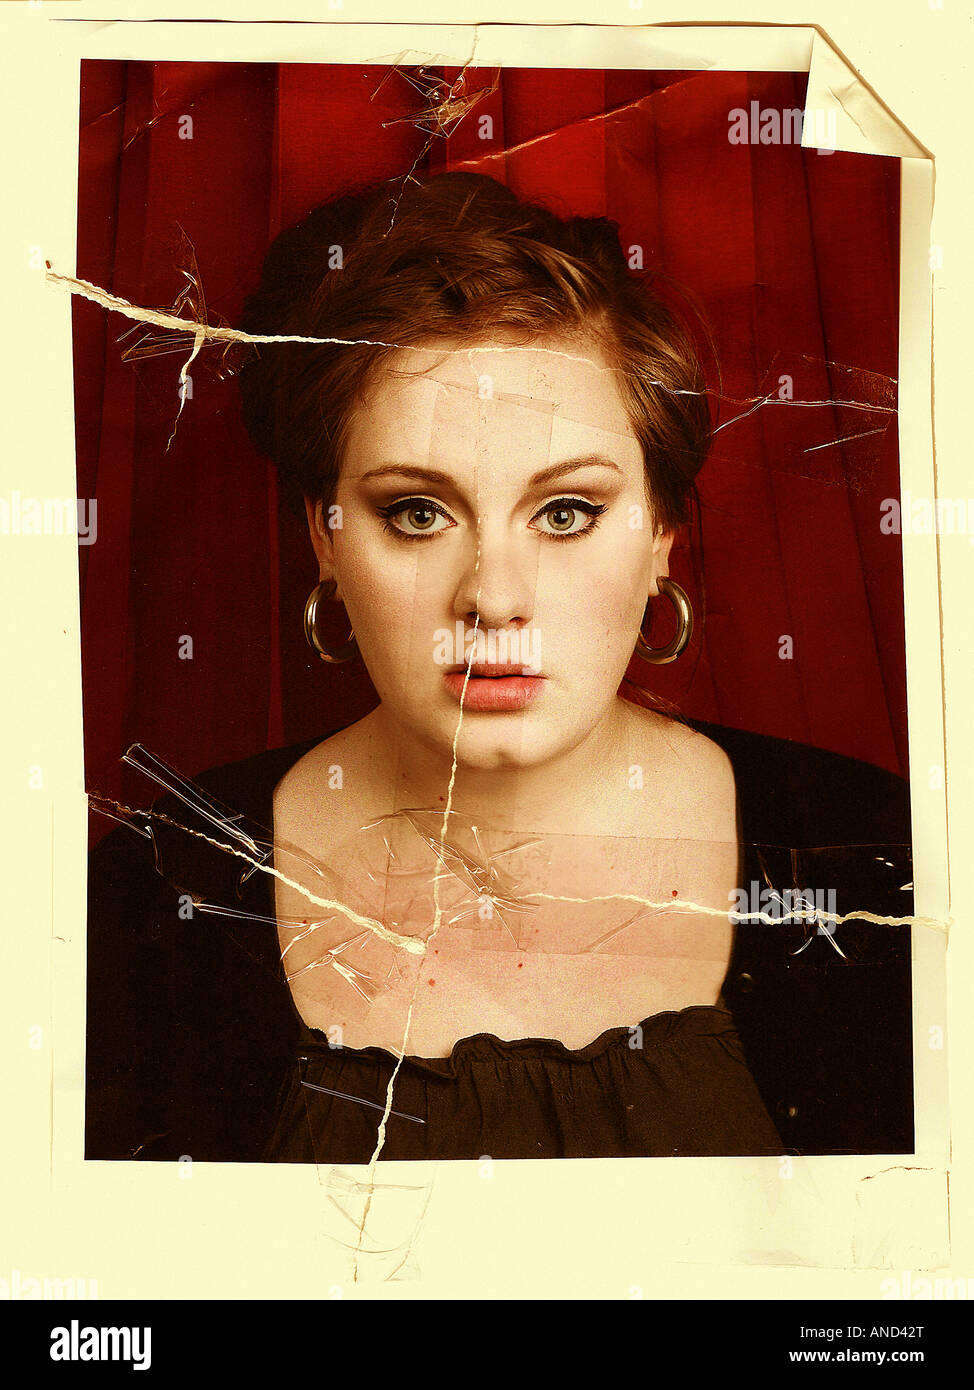 Adele Adkins Singer Songwriter photo booth portrait Stock Photo